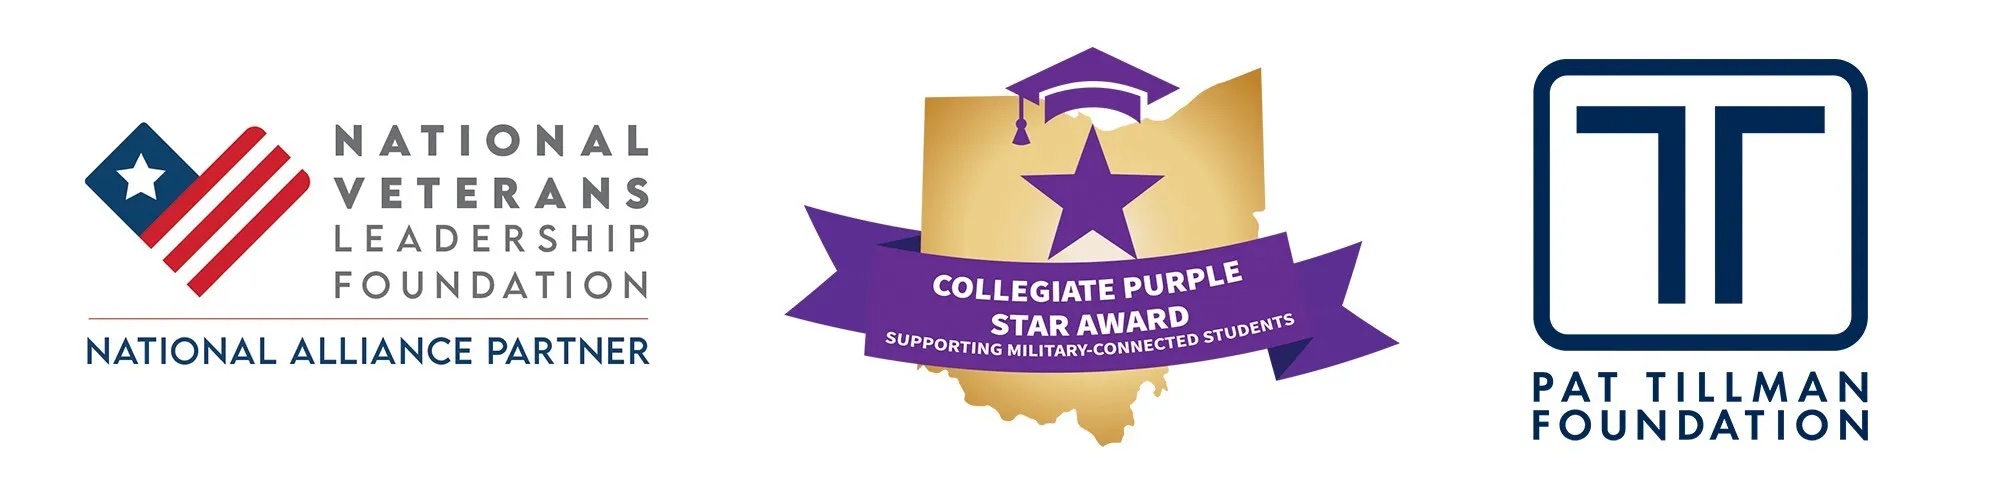 logos for National Veterans Leadership Foundation, Collegiate Purple Star Award, and Pat Tillman Foundation 